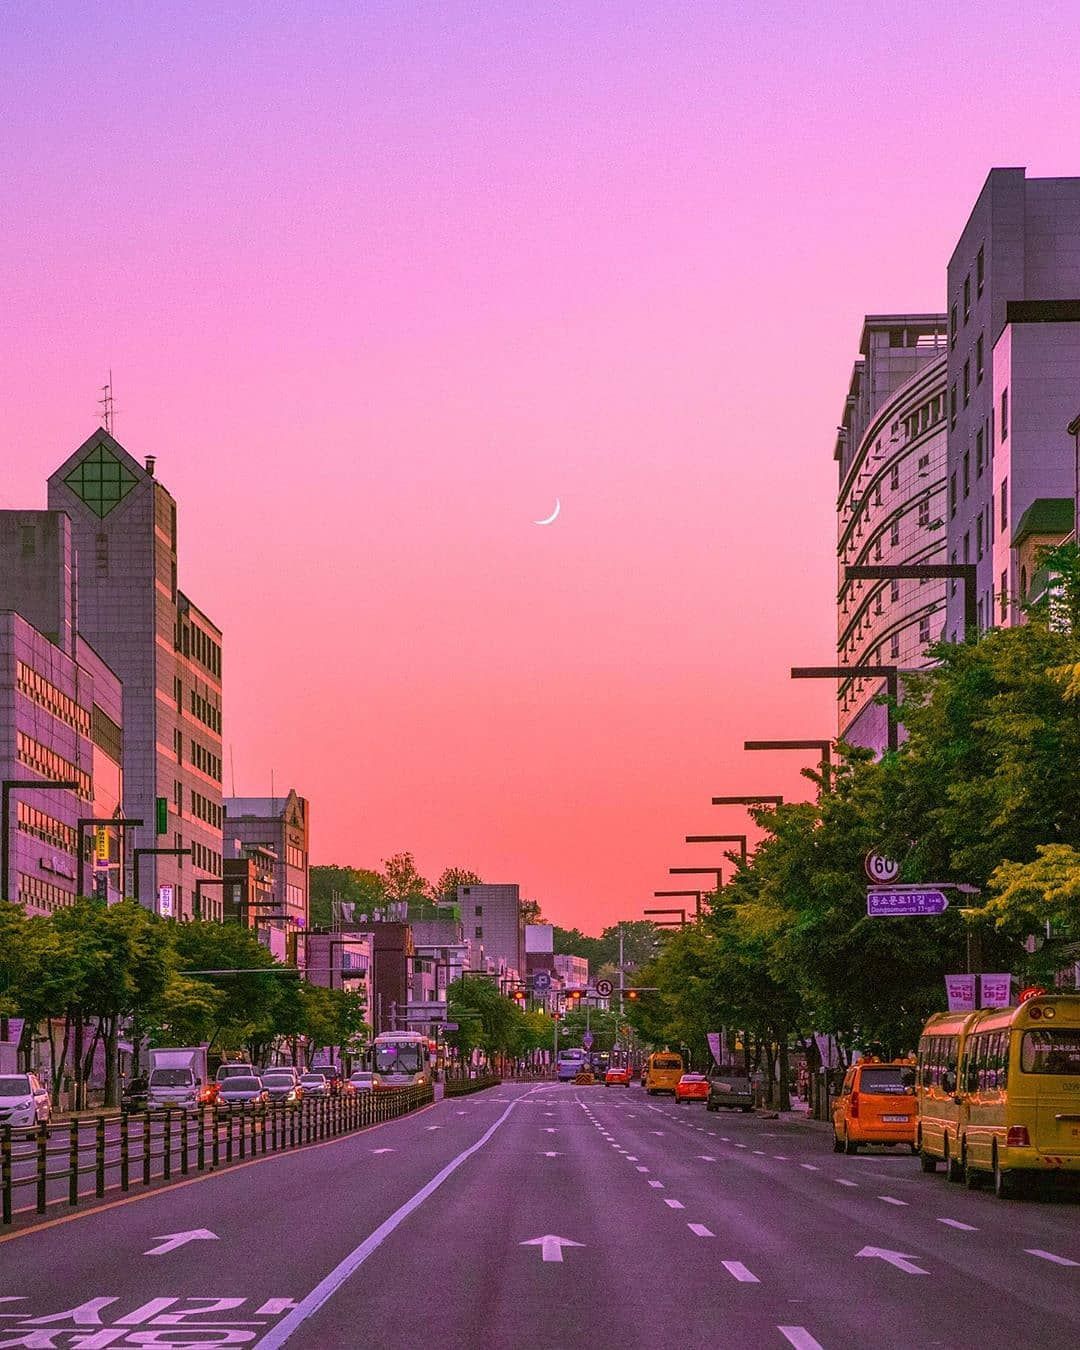 Aesthetic South Korea Street an City / Ville et Rue Coréenne. Tempat liburan, Pemandangan khayalan, Pemandangan